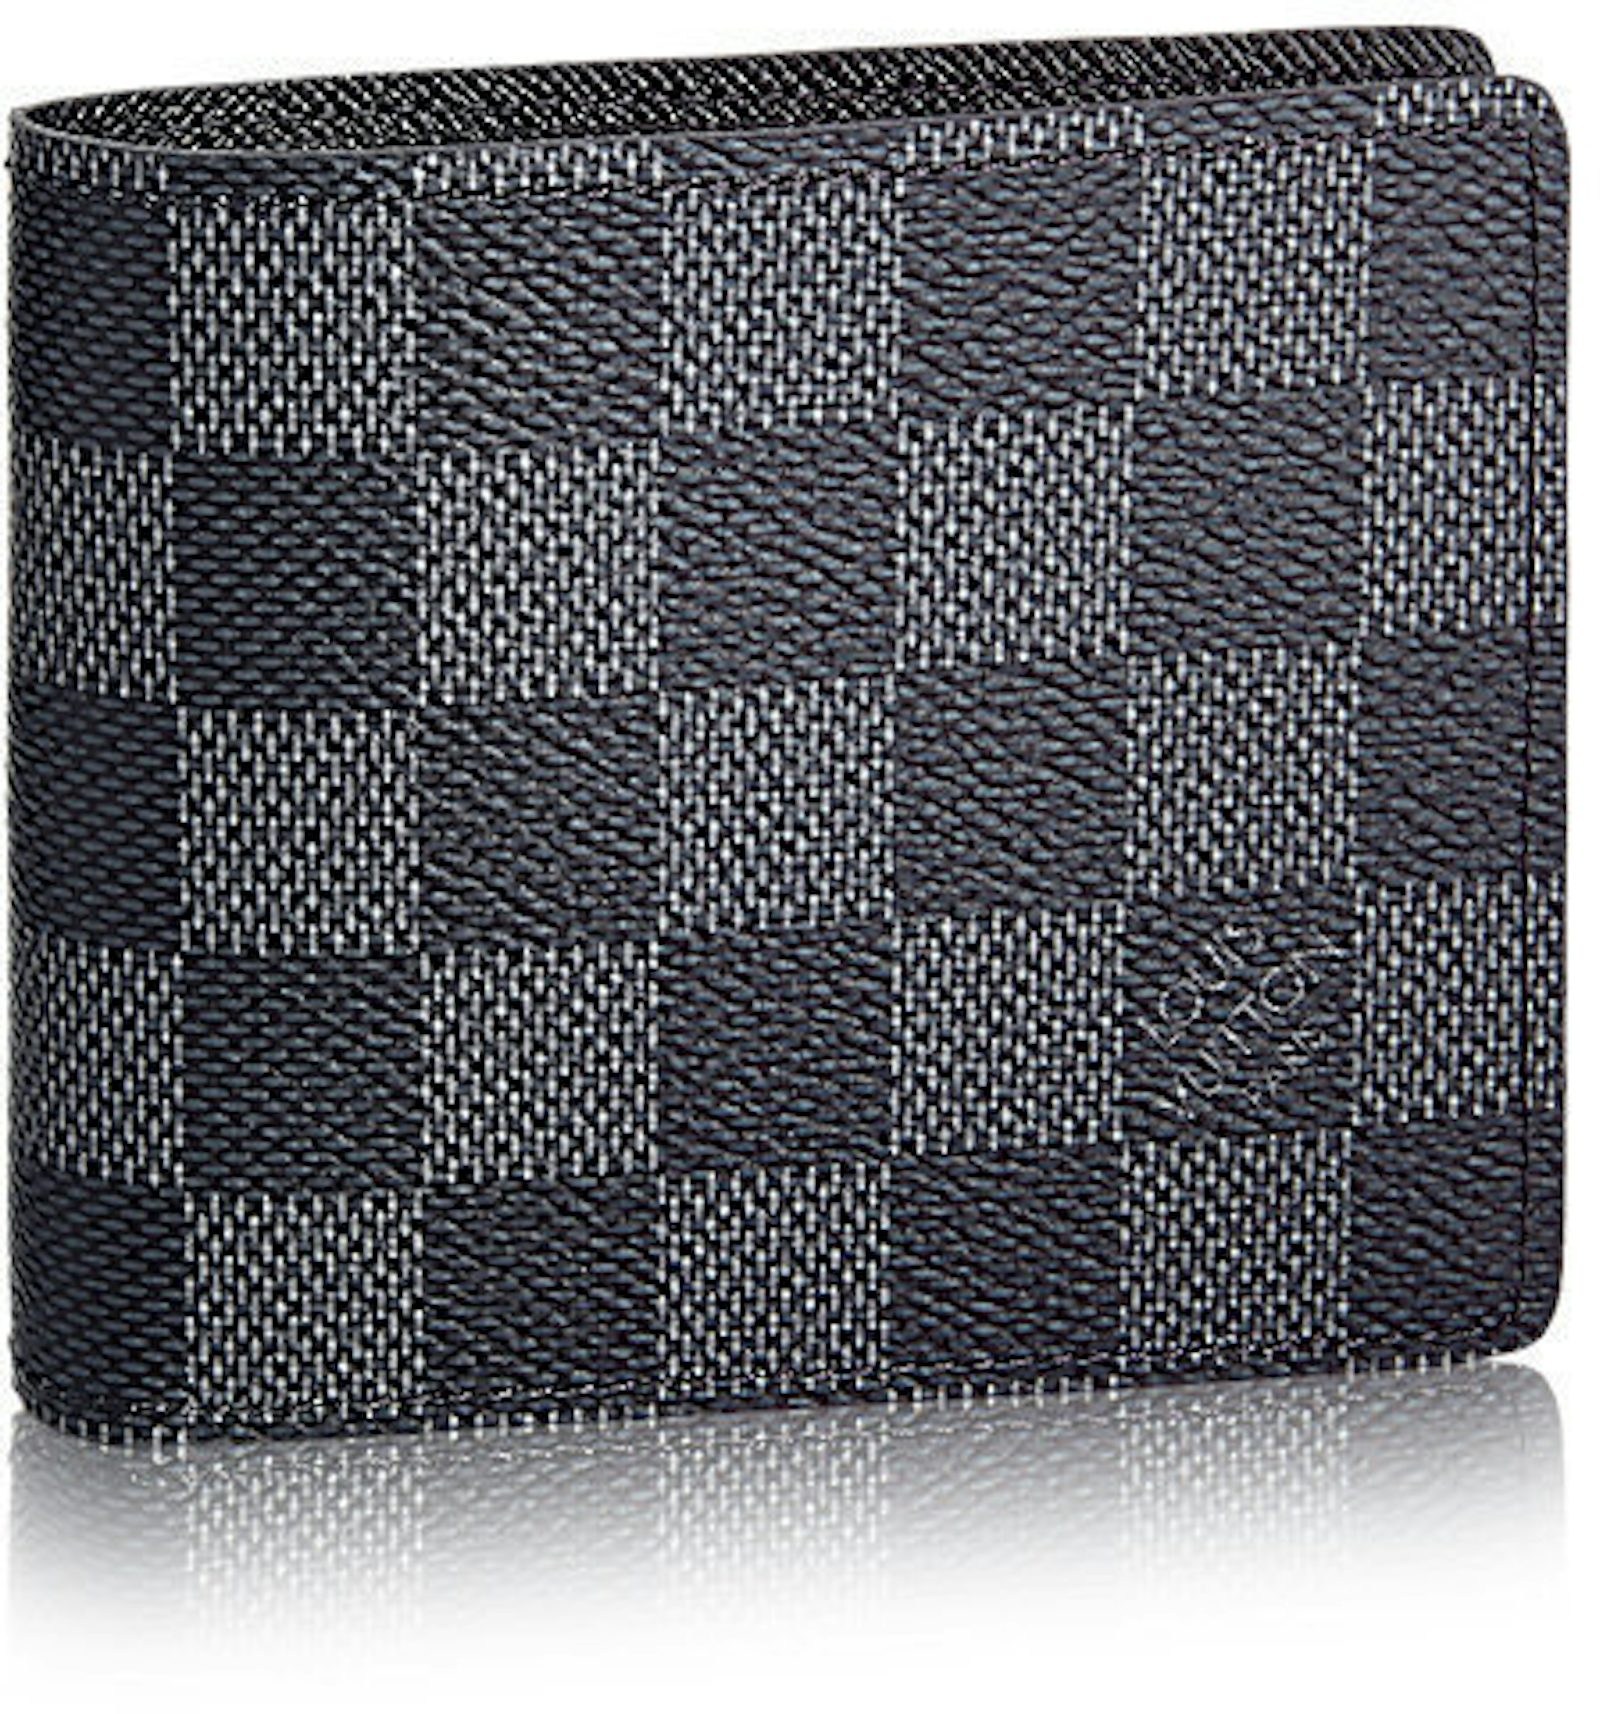 Louis Vuitton Wallet Slender Damier Graphite Gray/Black - GB